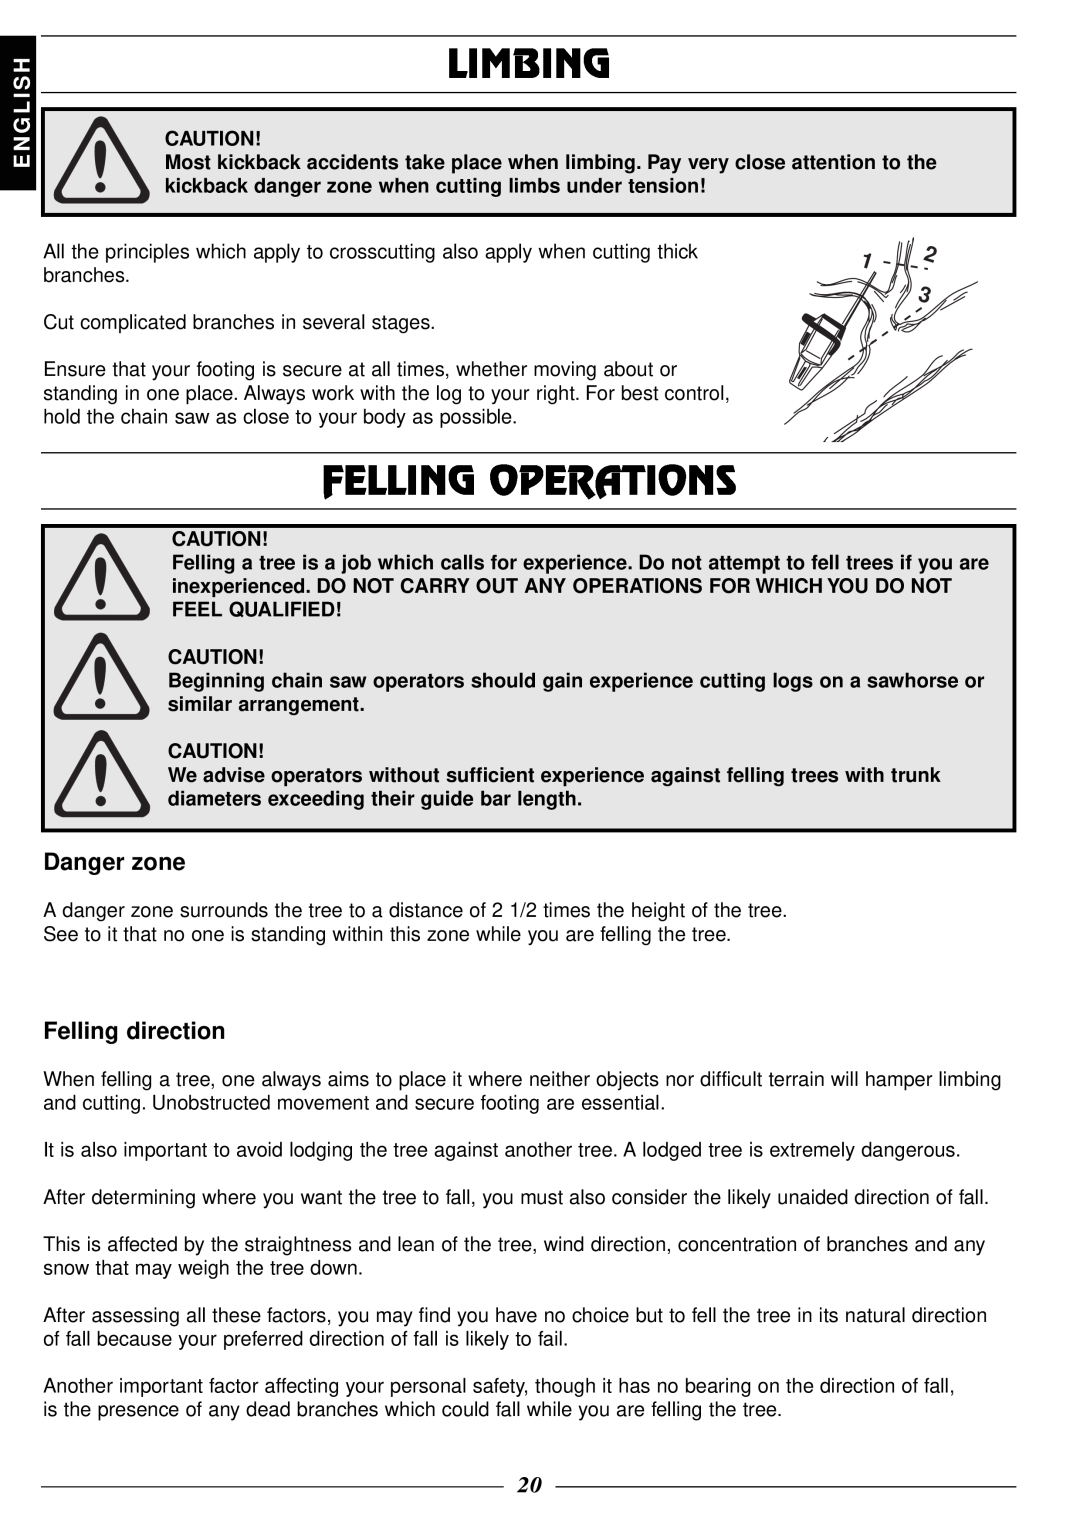 Husqvarna 315, 318 manual Limbing, Felling Operations, Danger zone, Felling direction, E N G L I S H 